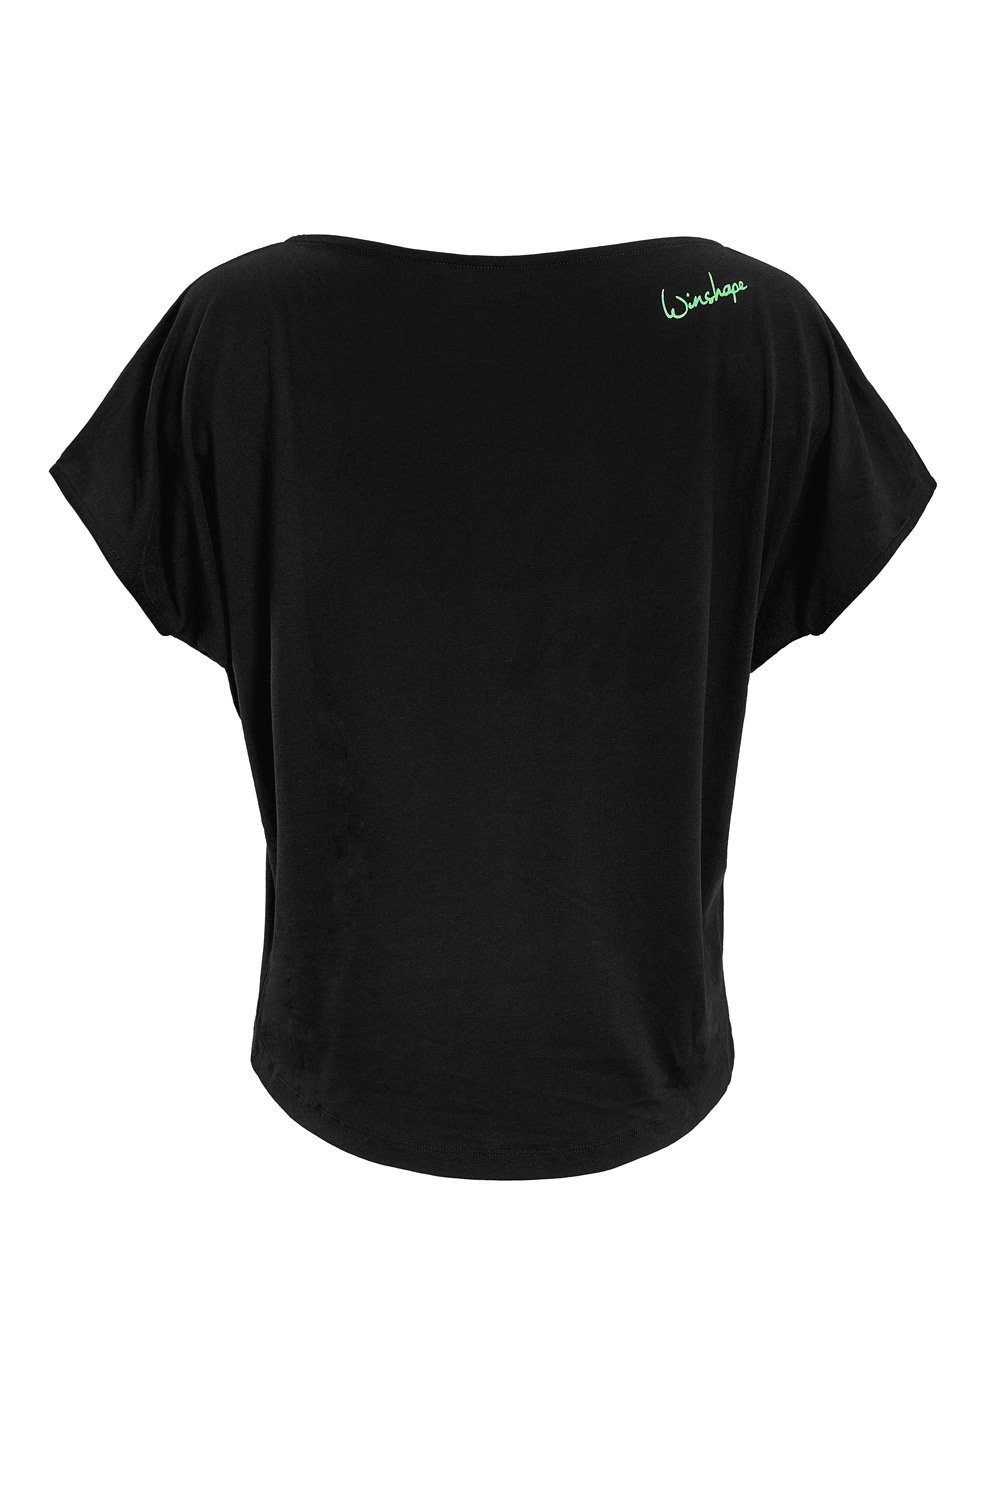 Neon grünem Winshape mit Glitzer-Aufdruck MCT002 leicht ultra Oversize-Shirt